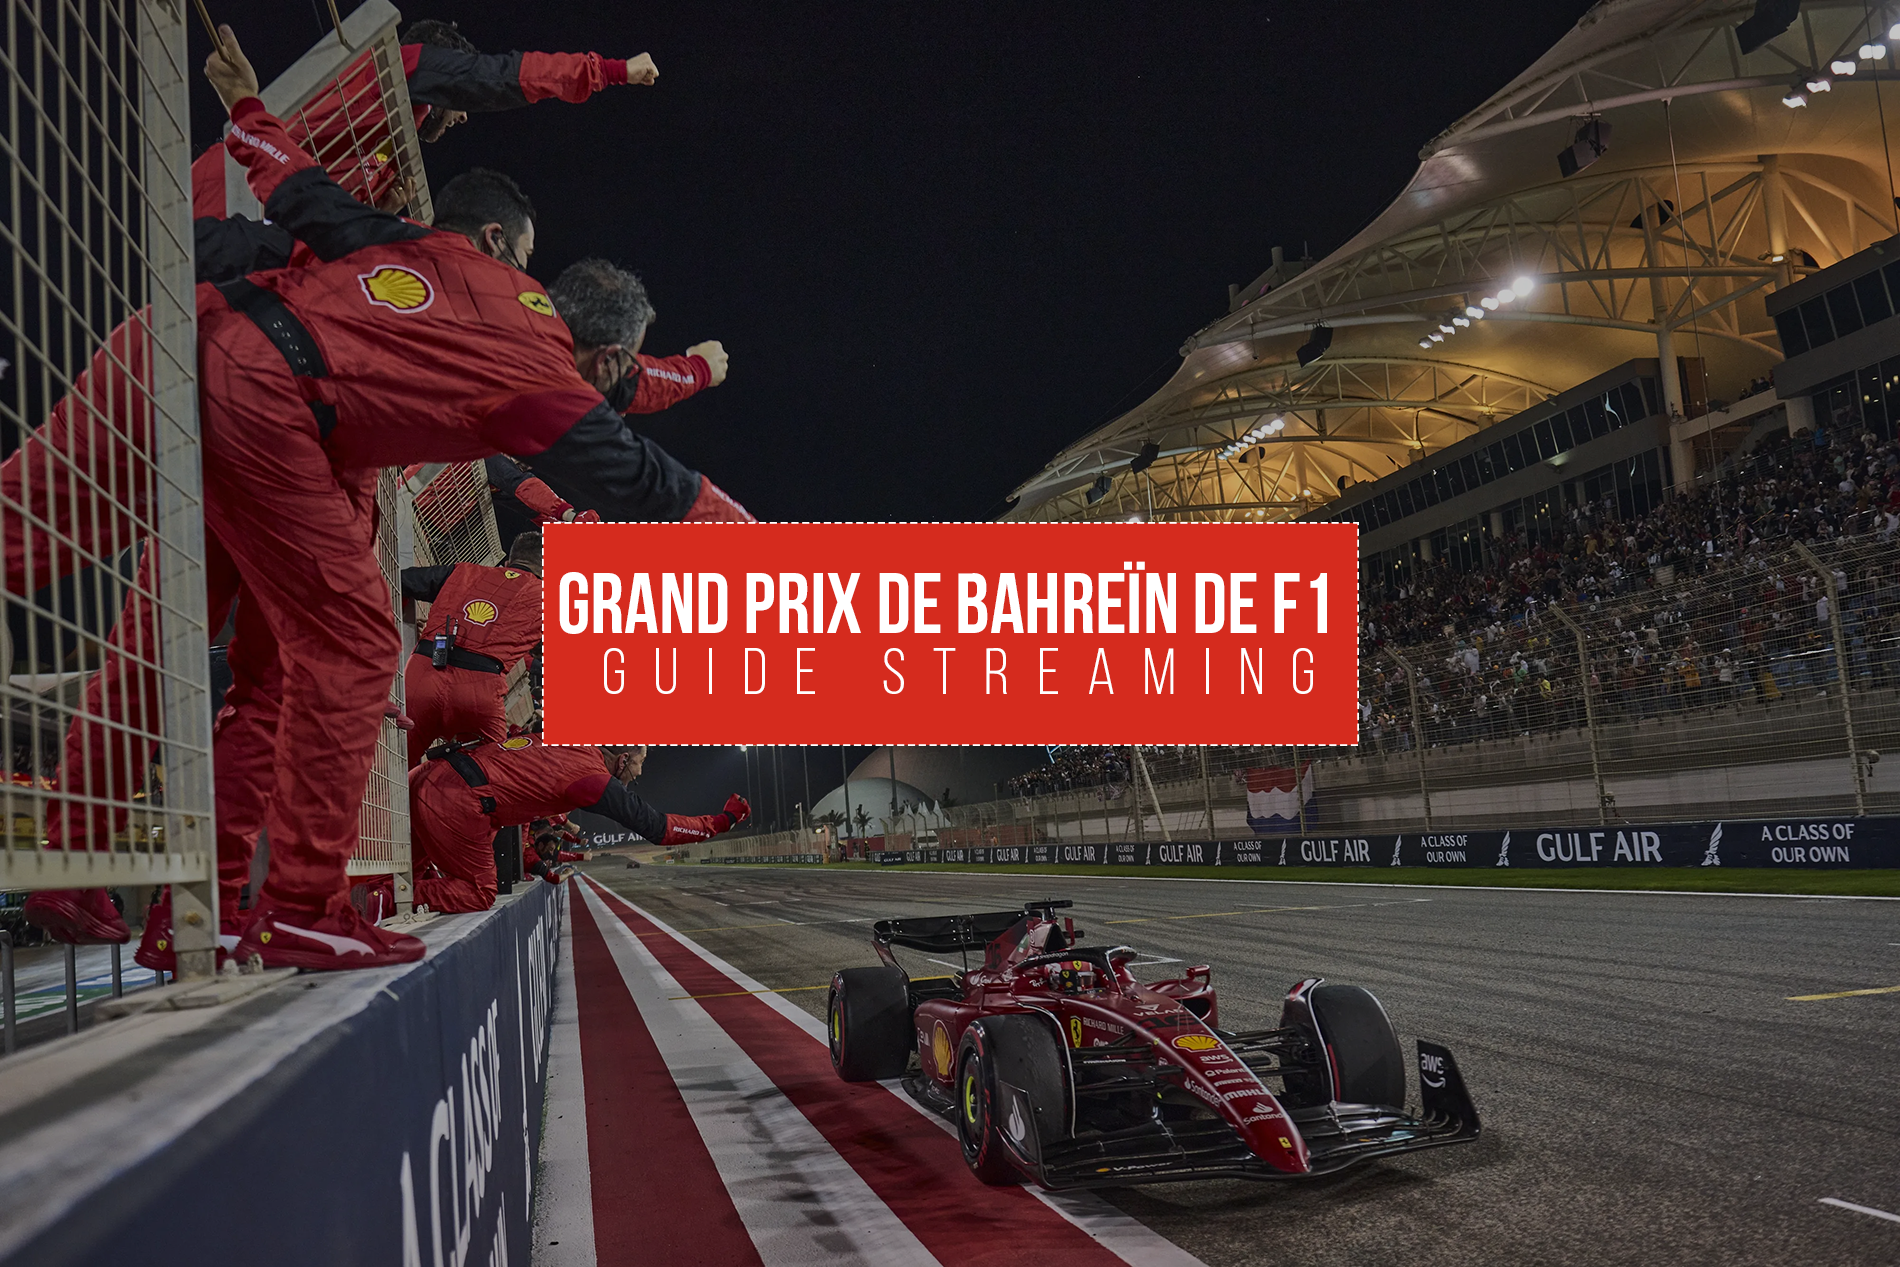 Grand Prix de Bahreïn de F1 : Où regarder les courses en streaming gratuit? (Sans VPN)